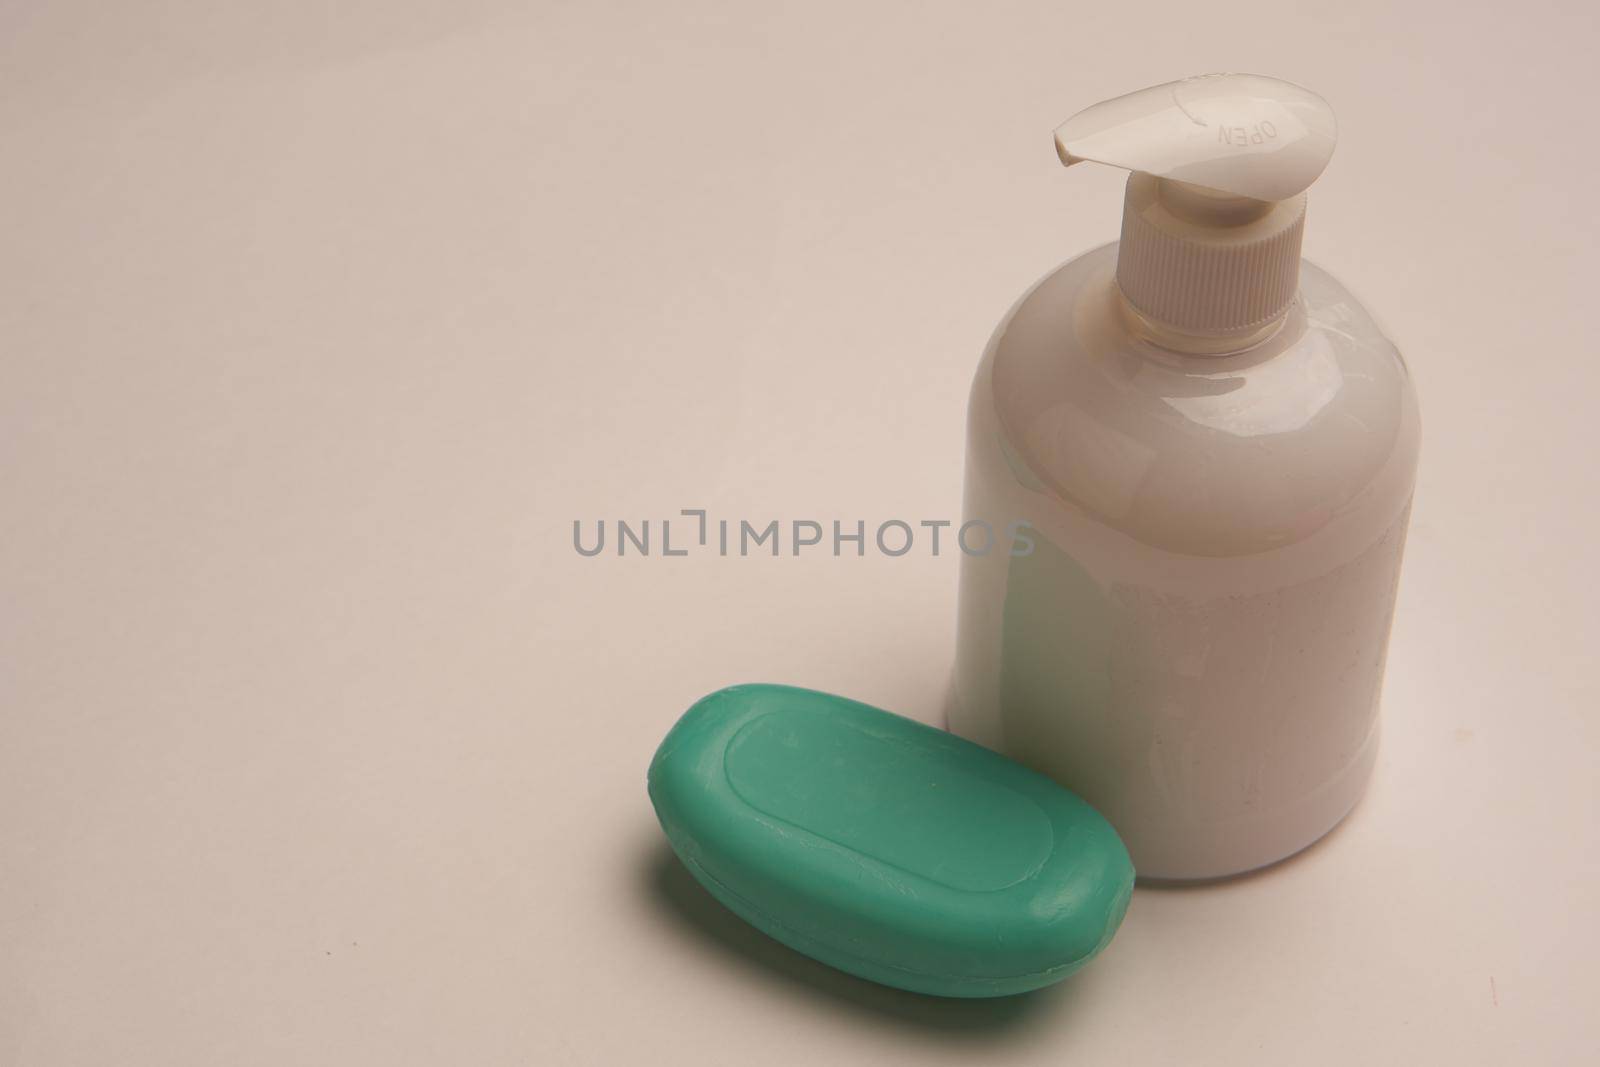 soap towel skin care bathroom accessories hygiene. High quality photo